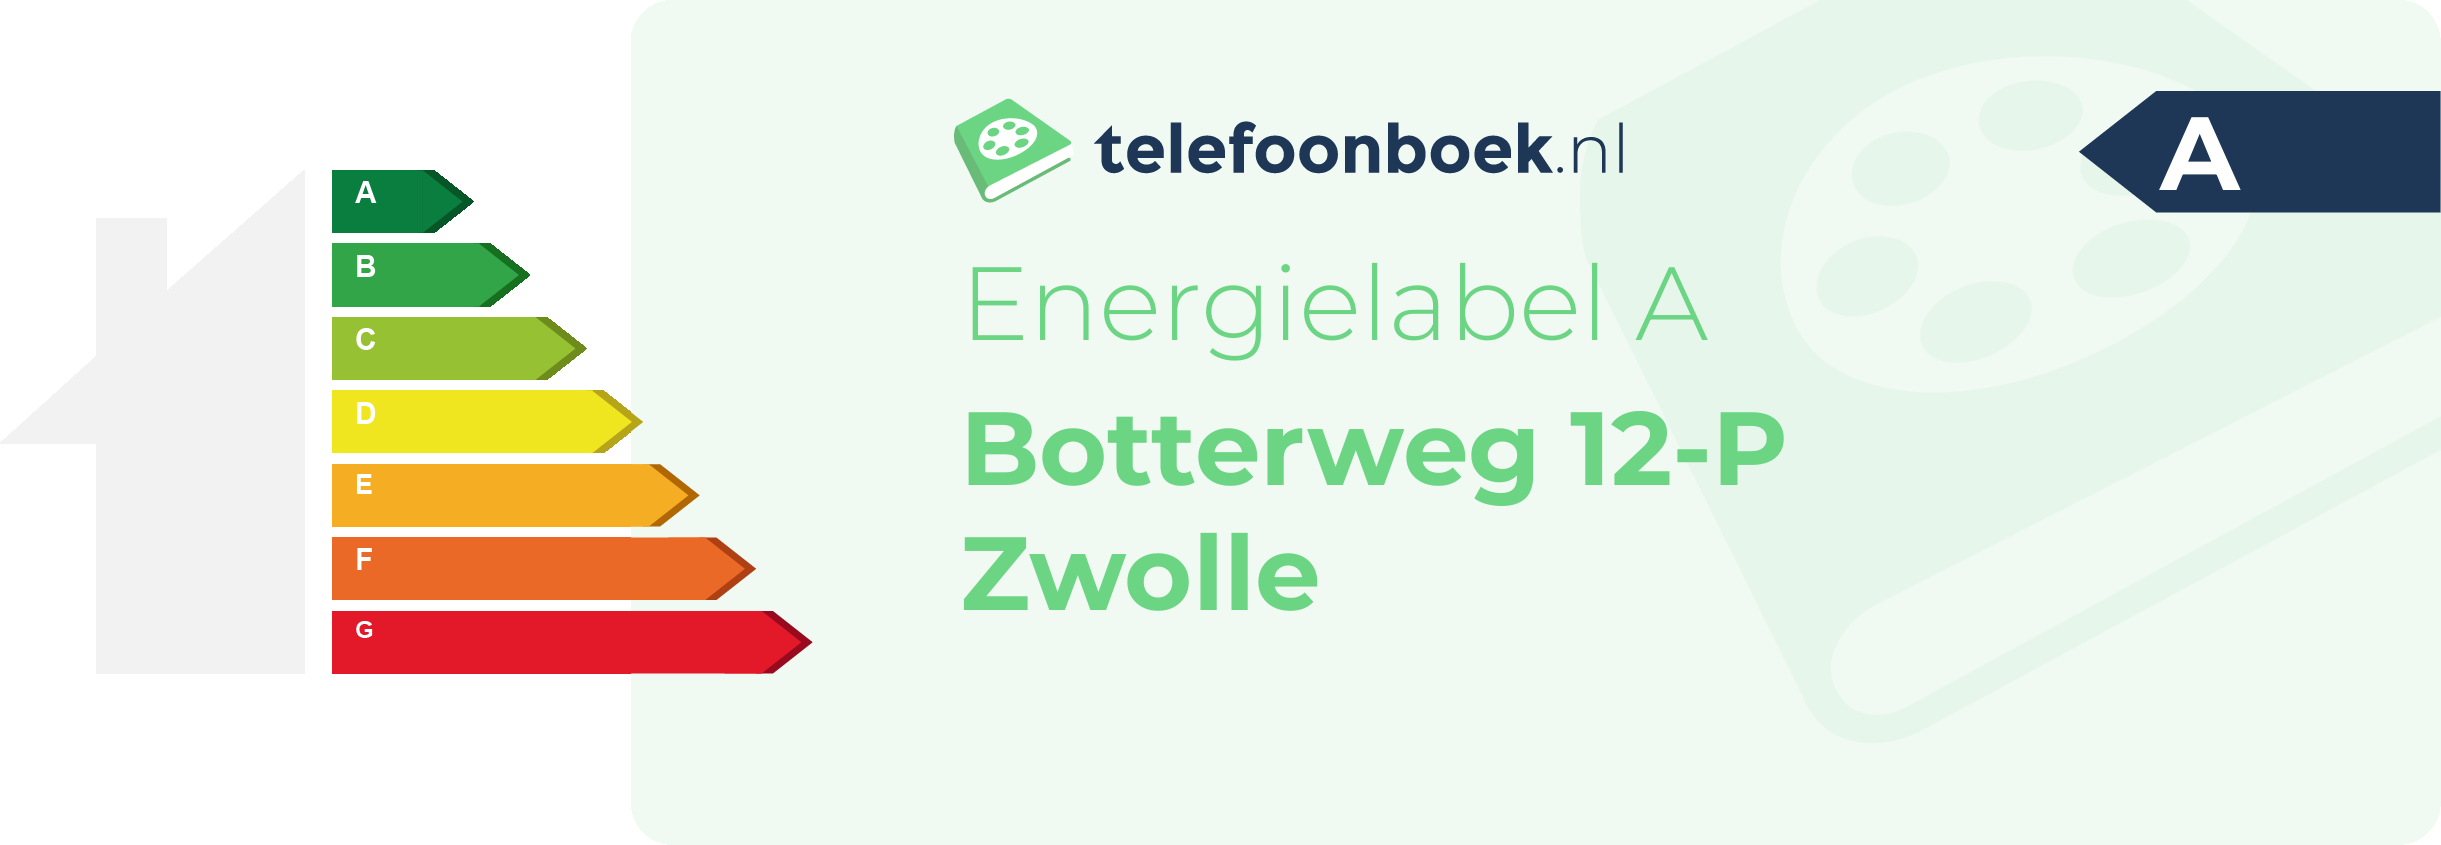 Energielabel Botterweg 12-P Zwolle